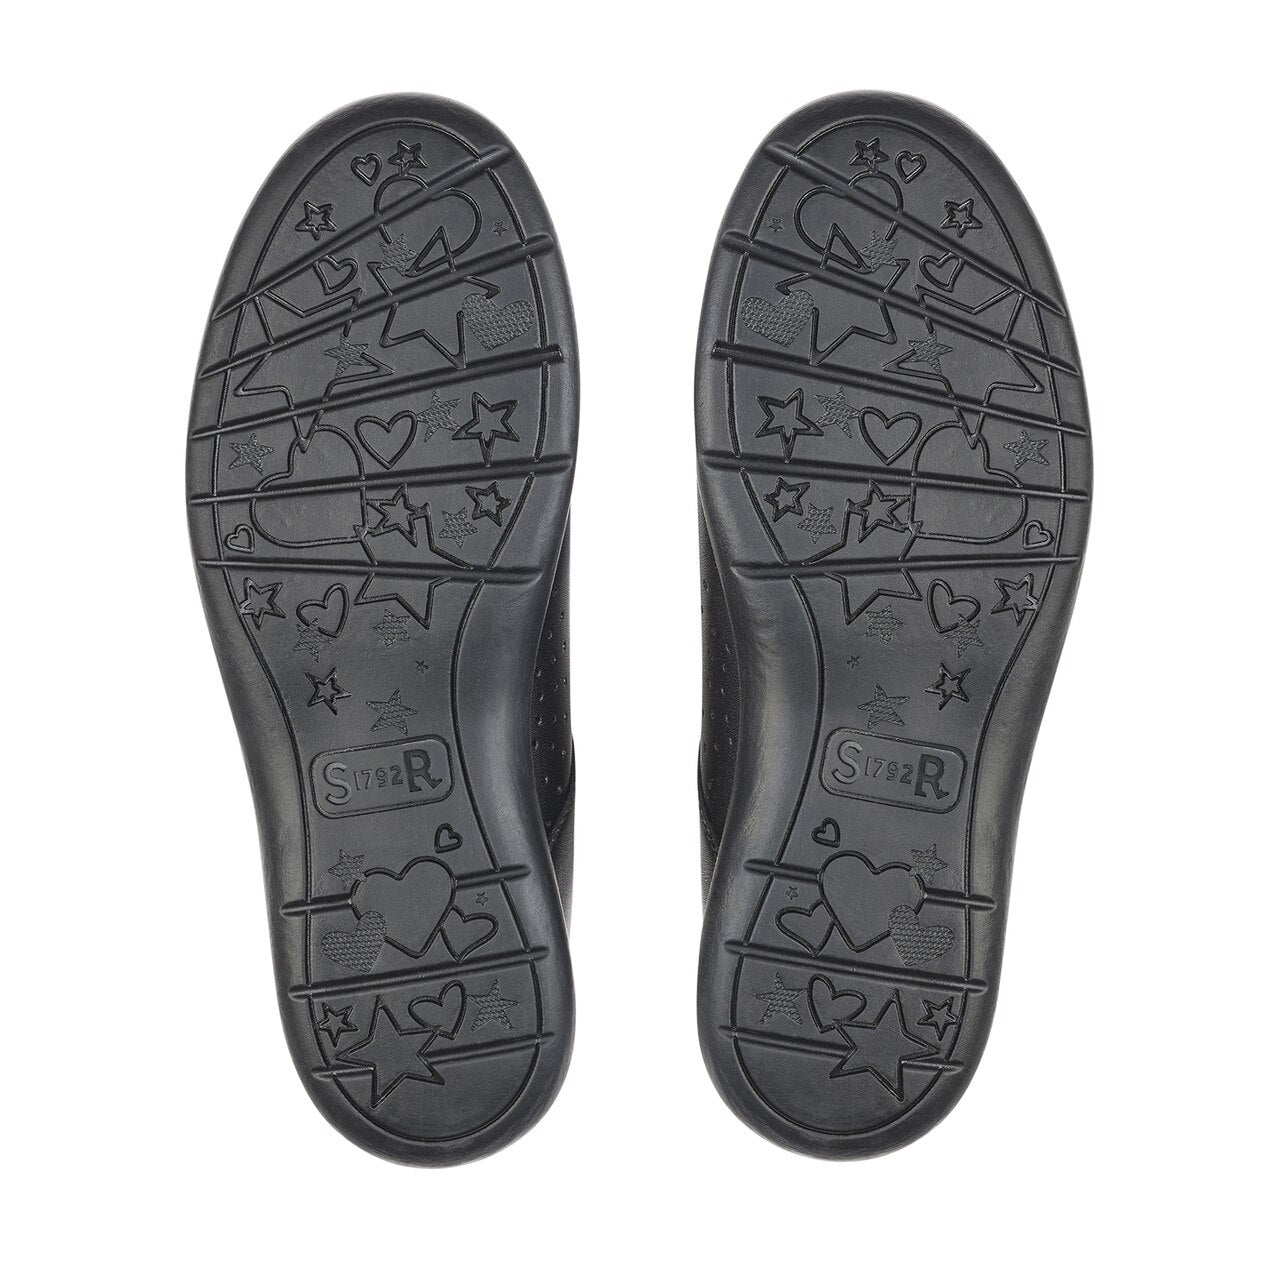 Star Jump Black Patent Leather T-Bar Girl's School Shoe